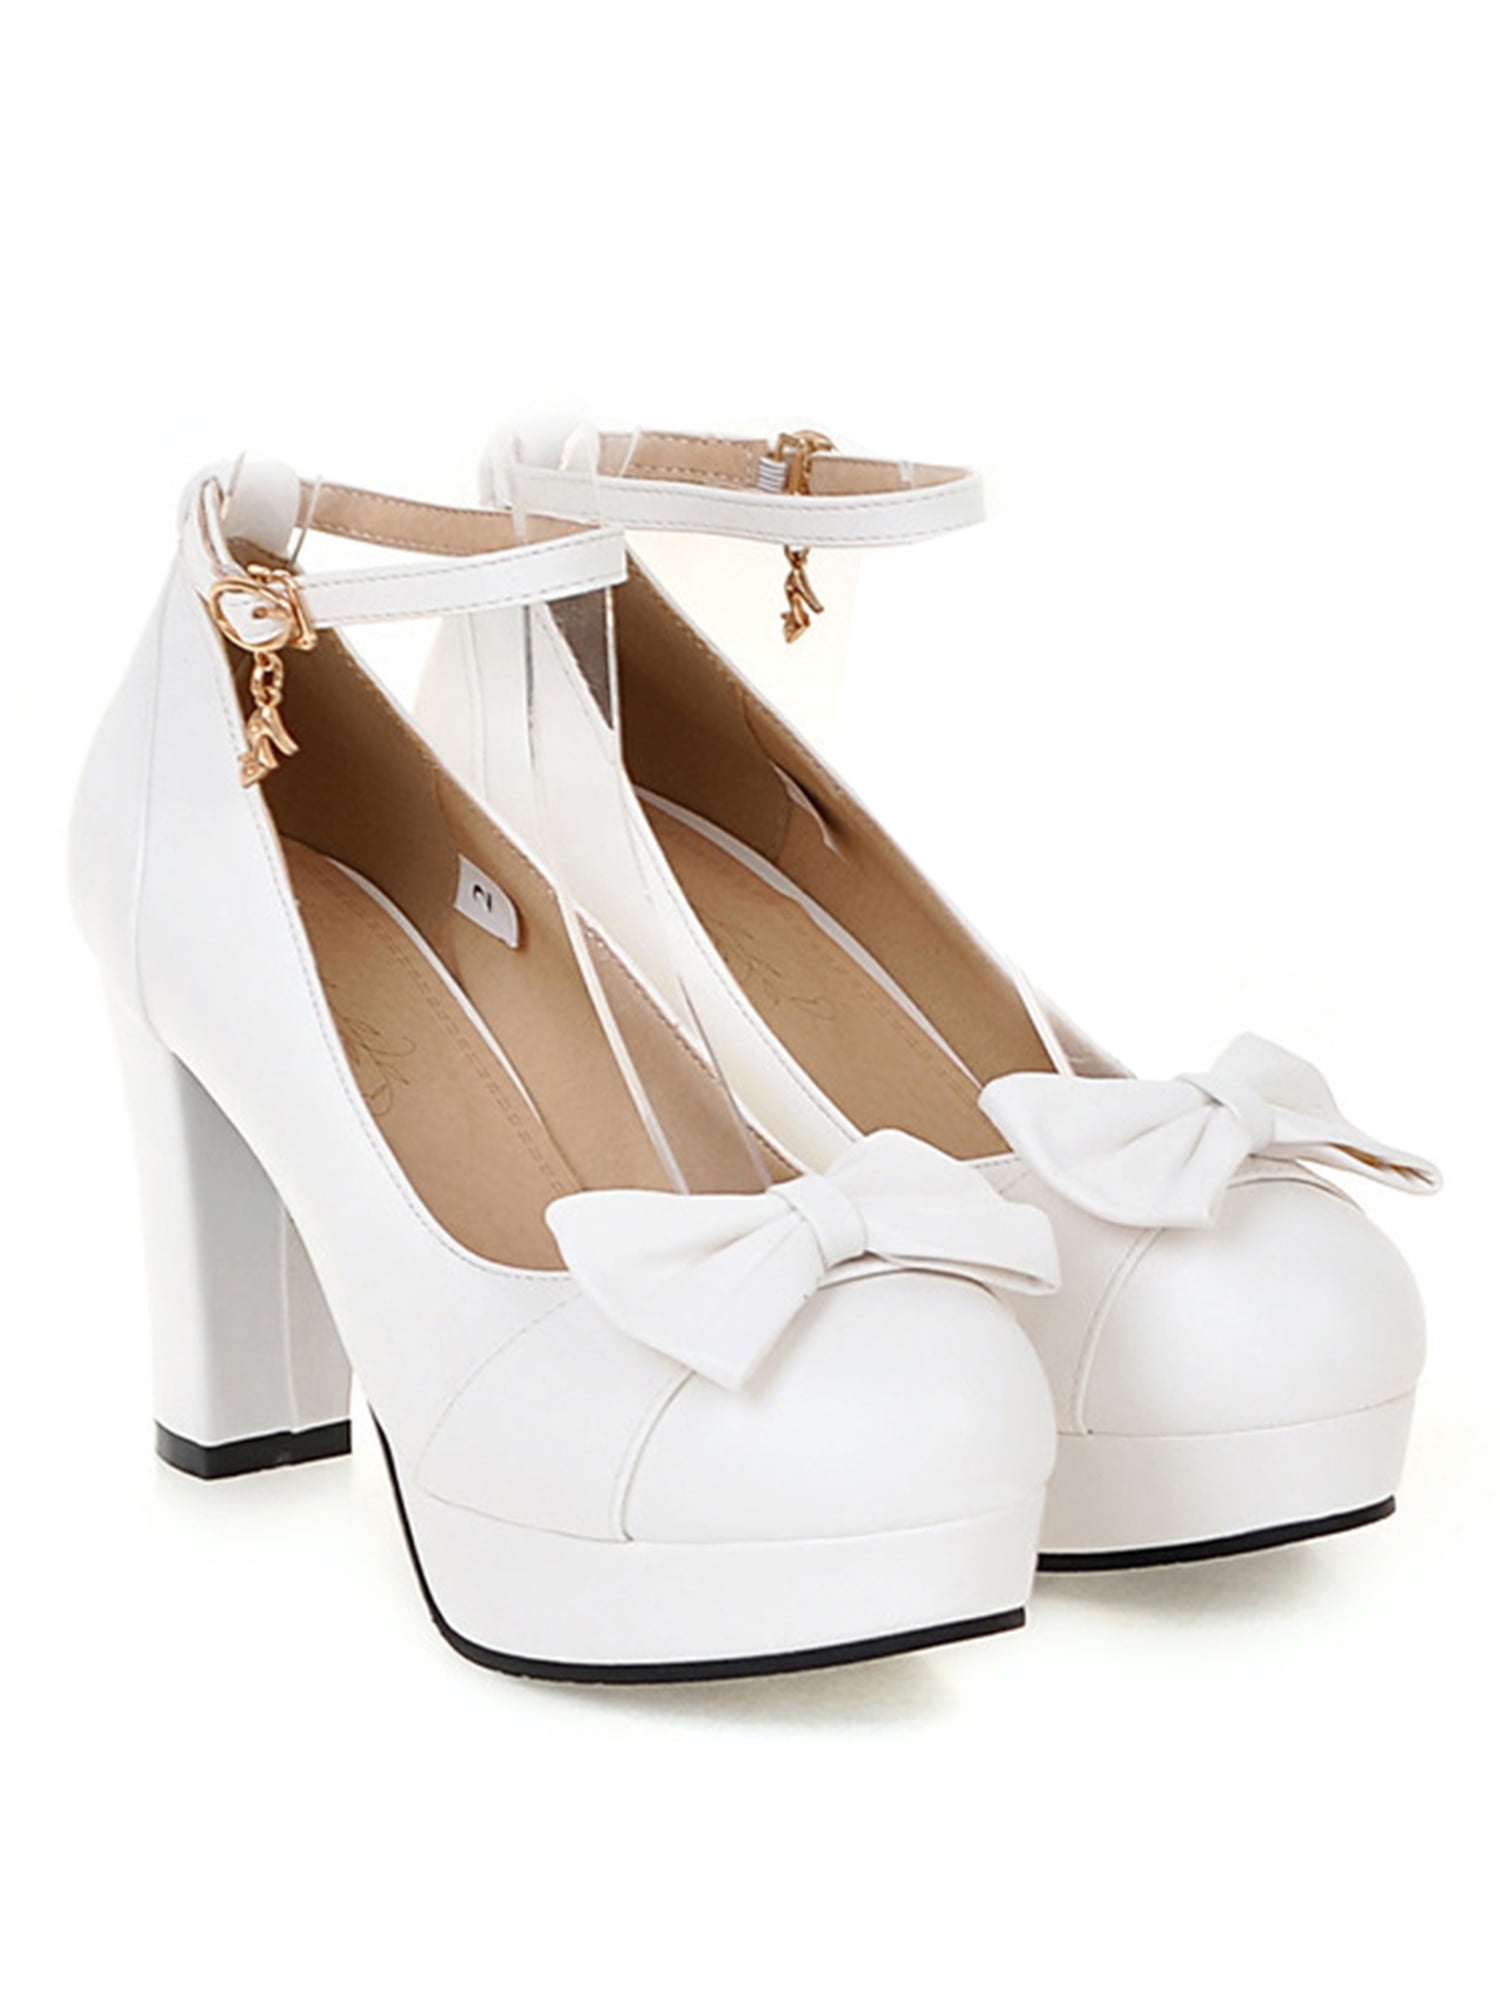 NEW VETASTE Womens White Ankle Toe Strap Dress High Heels Size 10 Shoes  Sandals | eBay